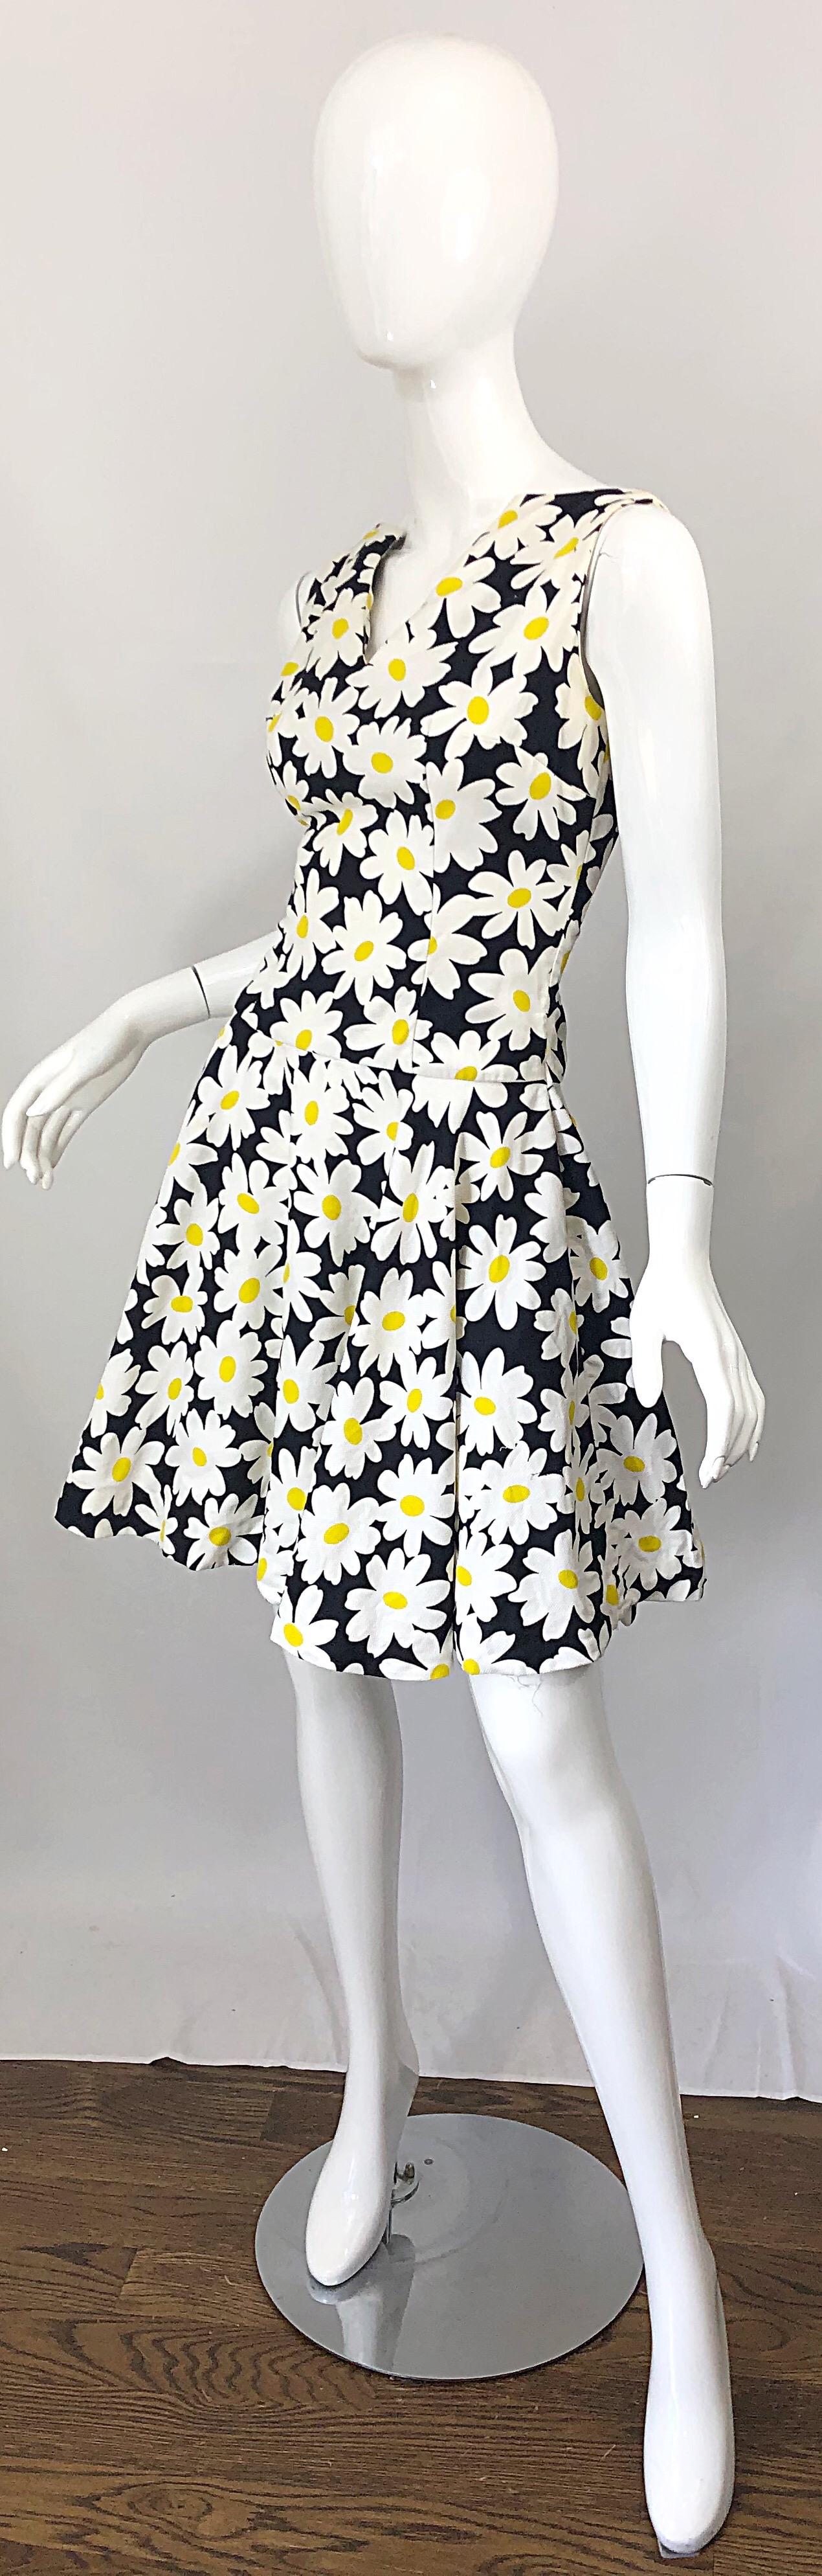 I Magnin 1960s Black and White Daisy Print Pique Cotton Vintage 60s A Line Dress For Sale 4